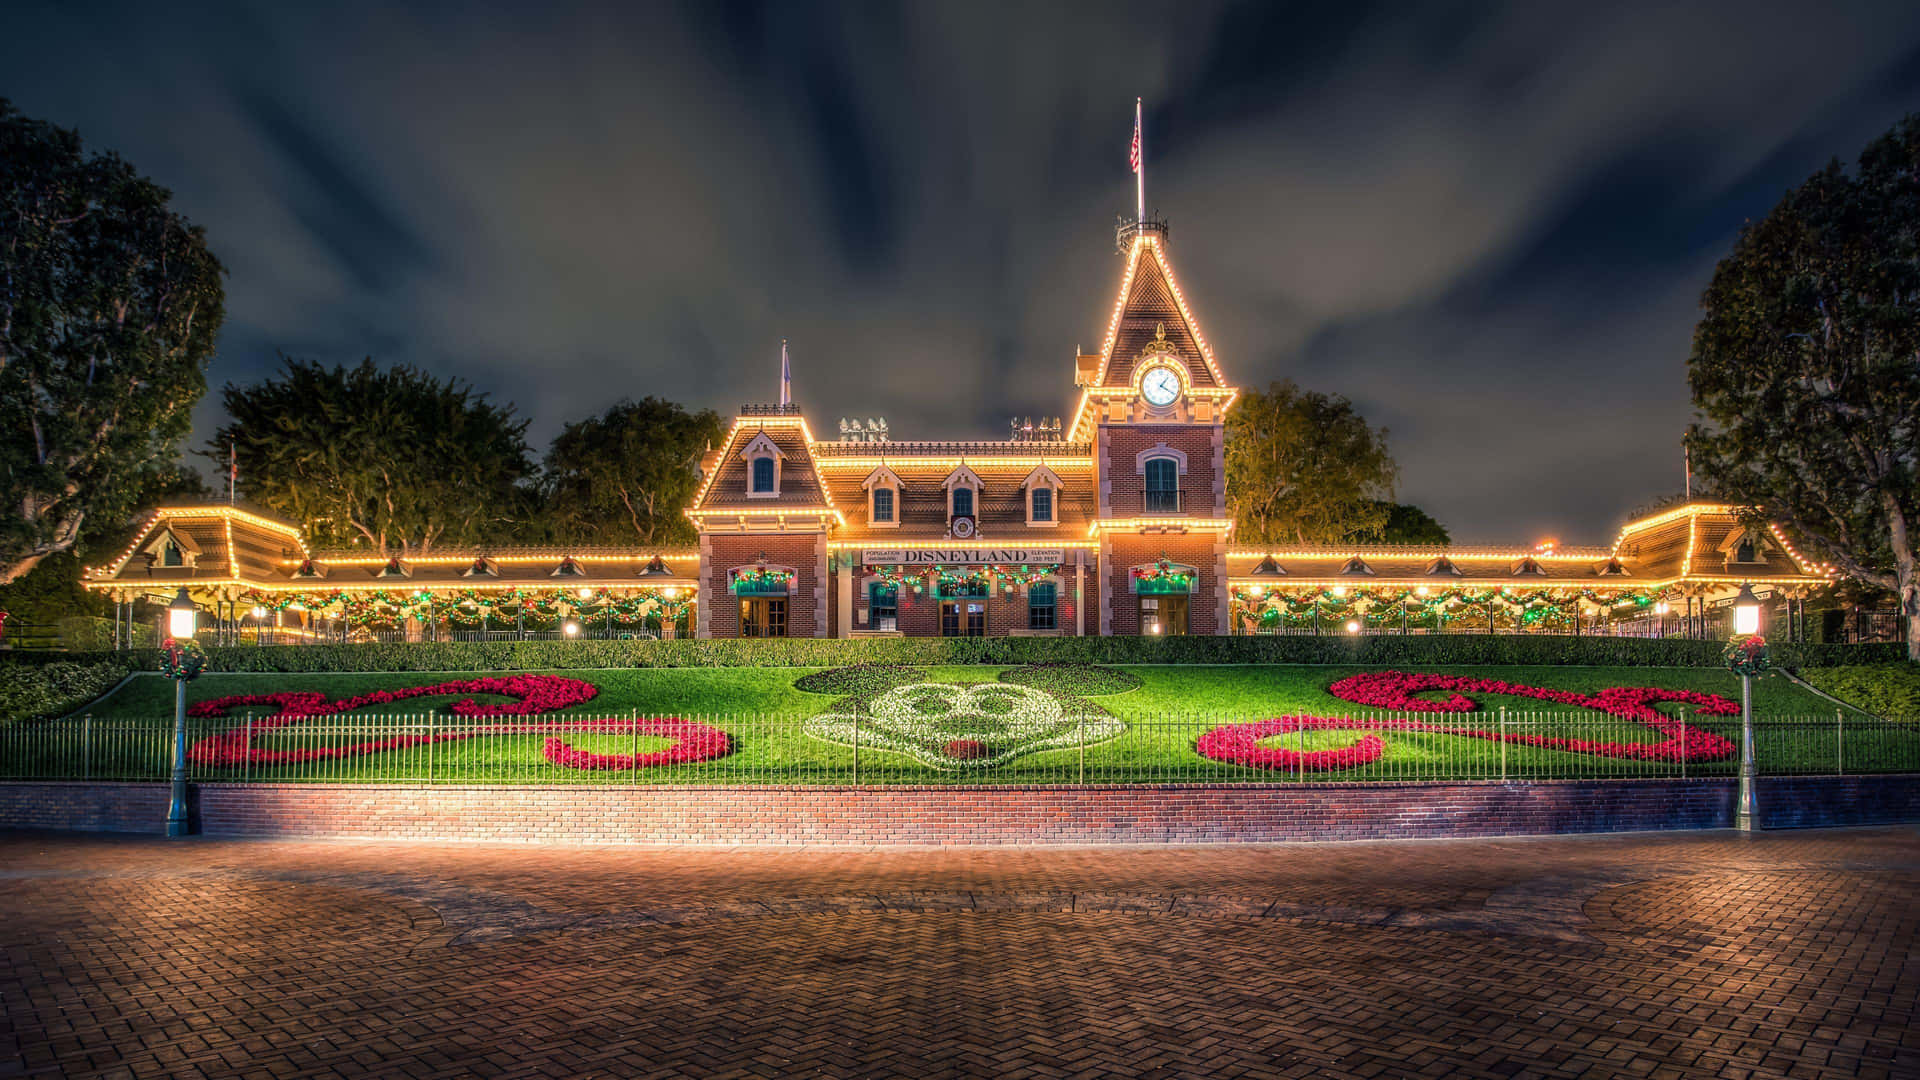 Explore The Magic of Disneyland